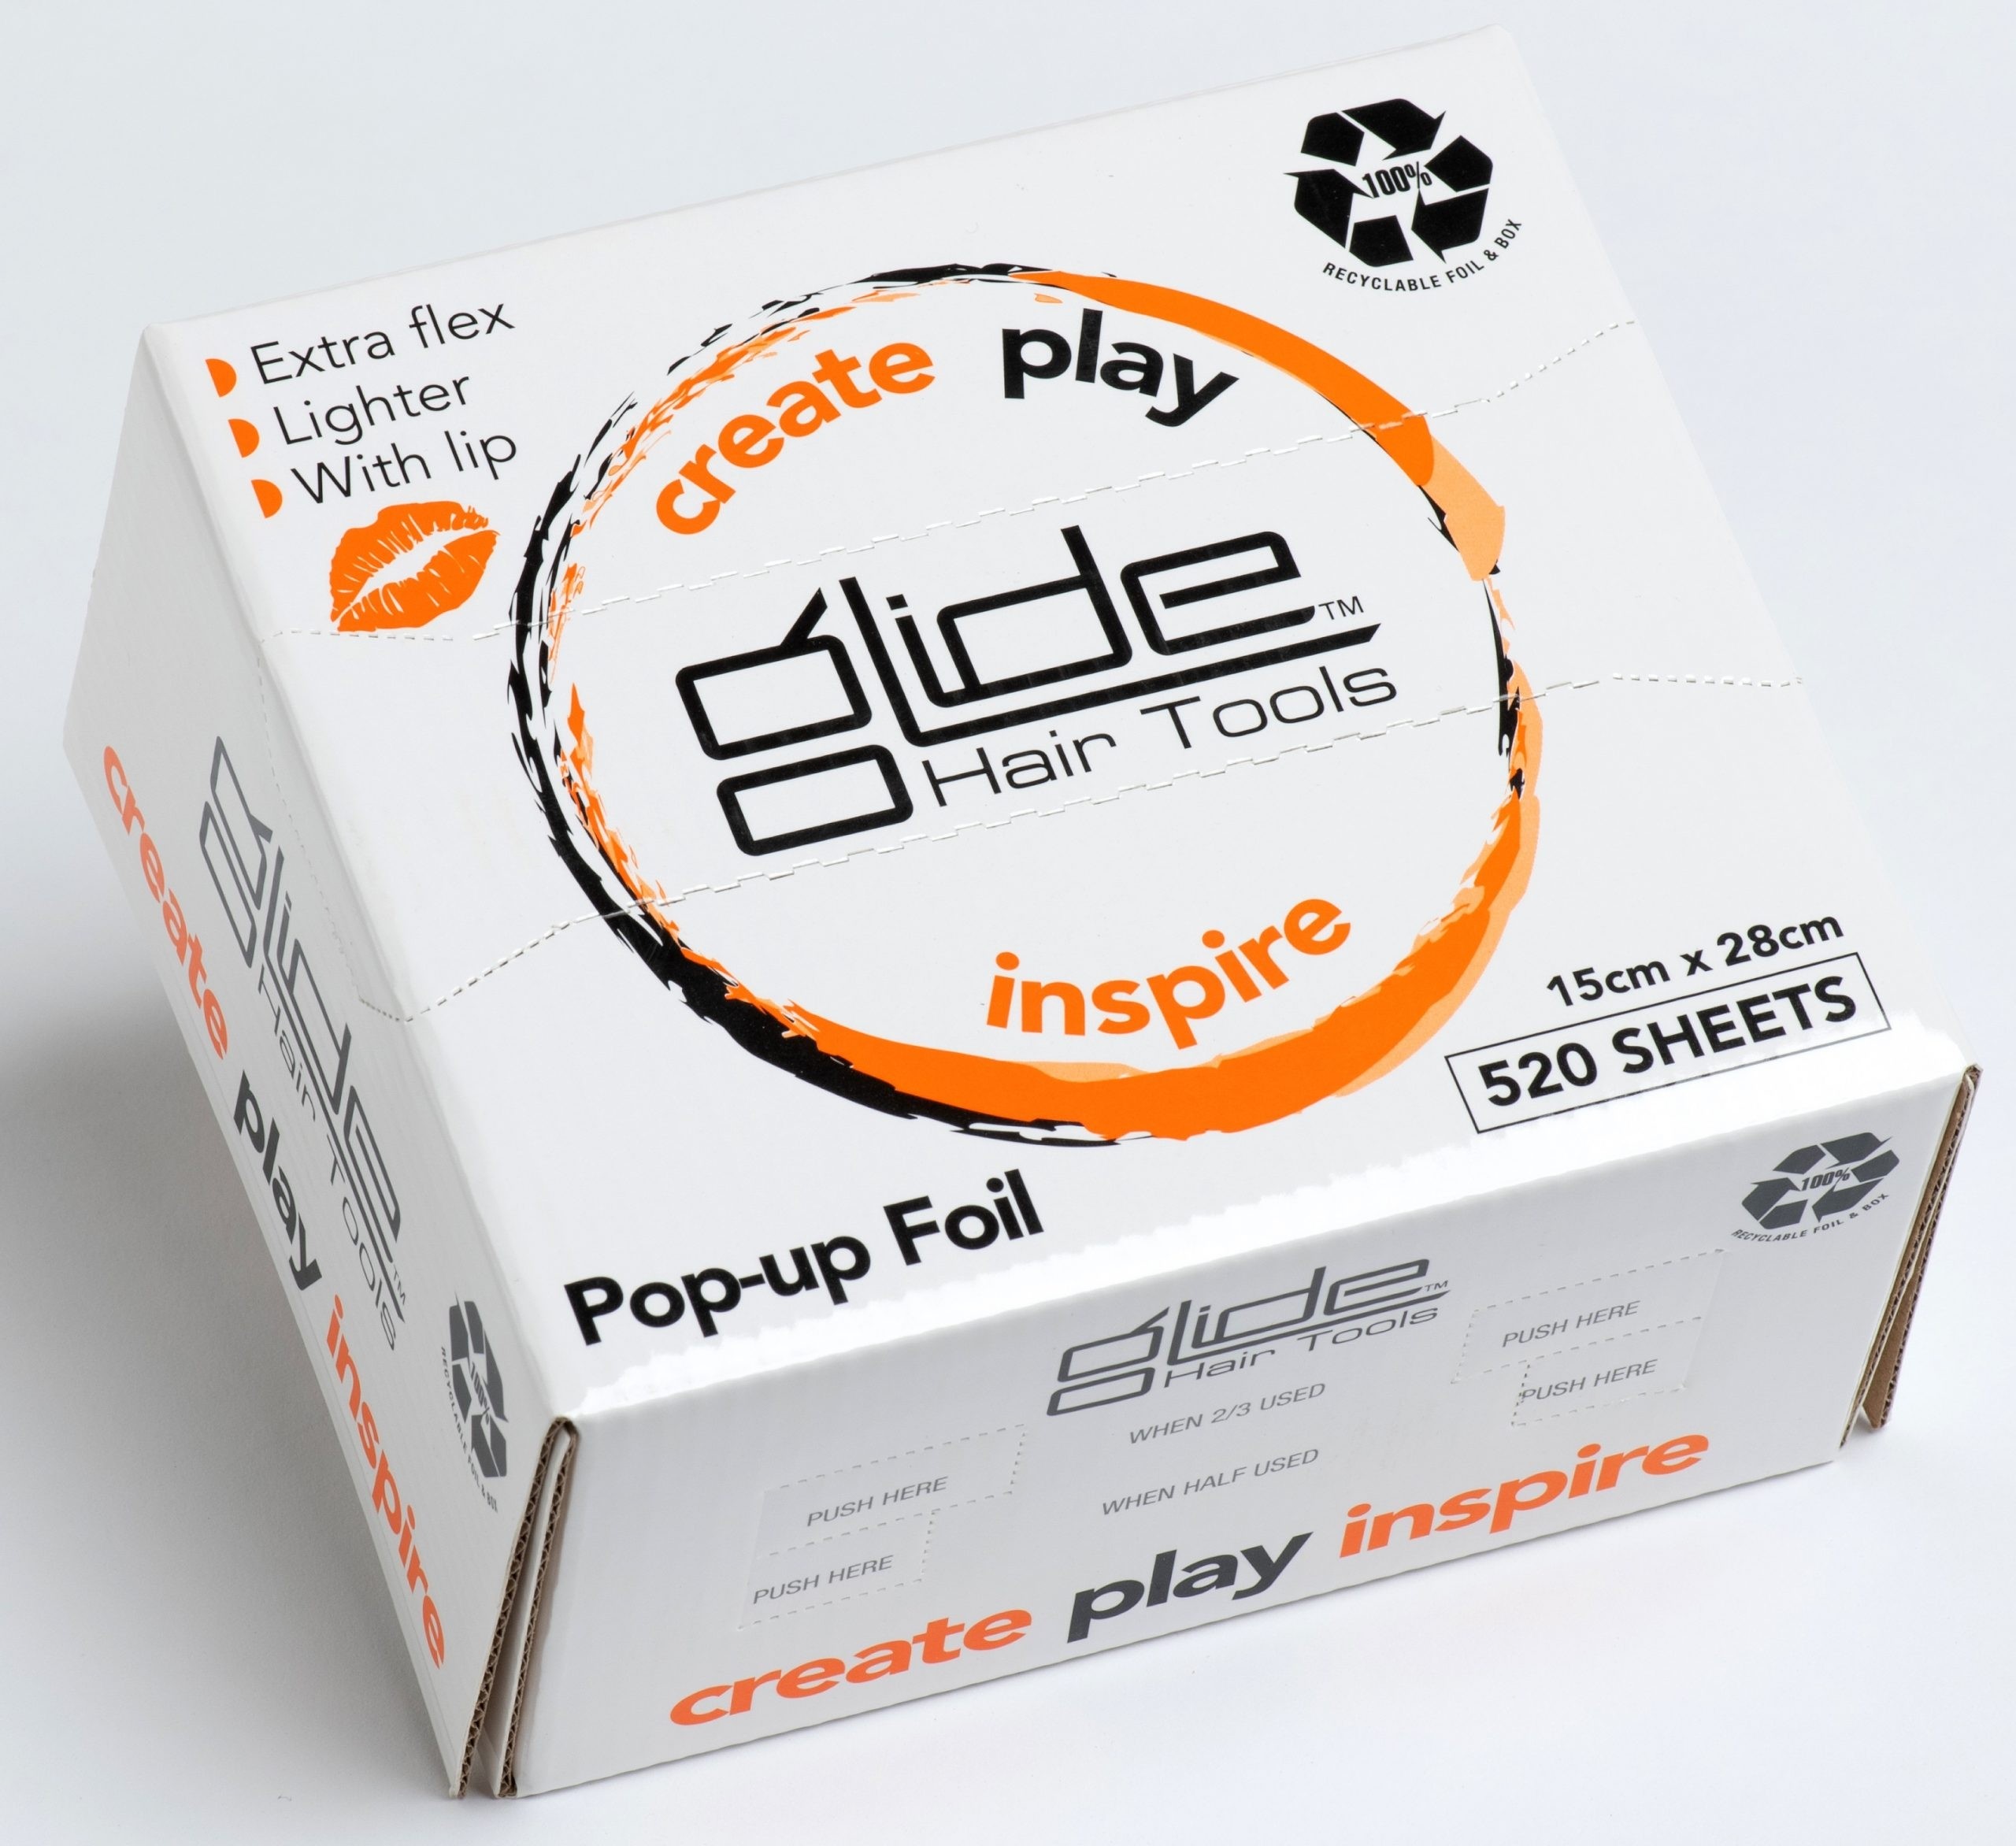 Glide Create,Play, Inspire Foil